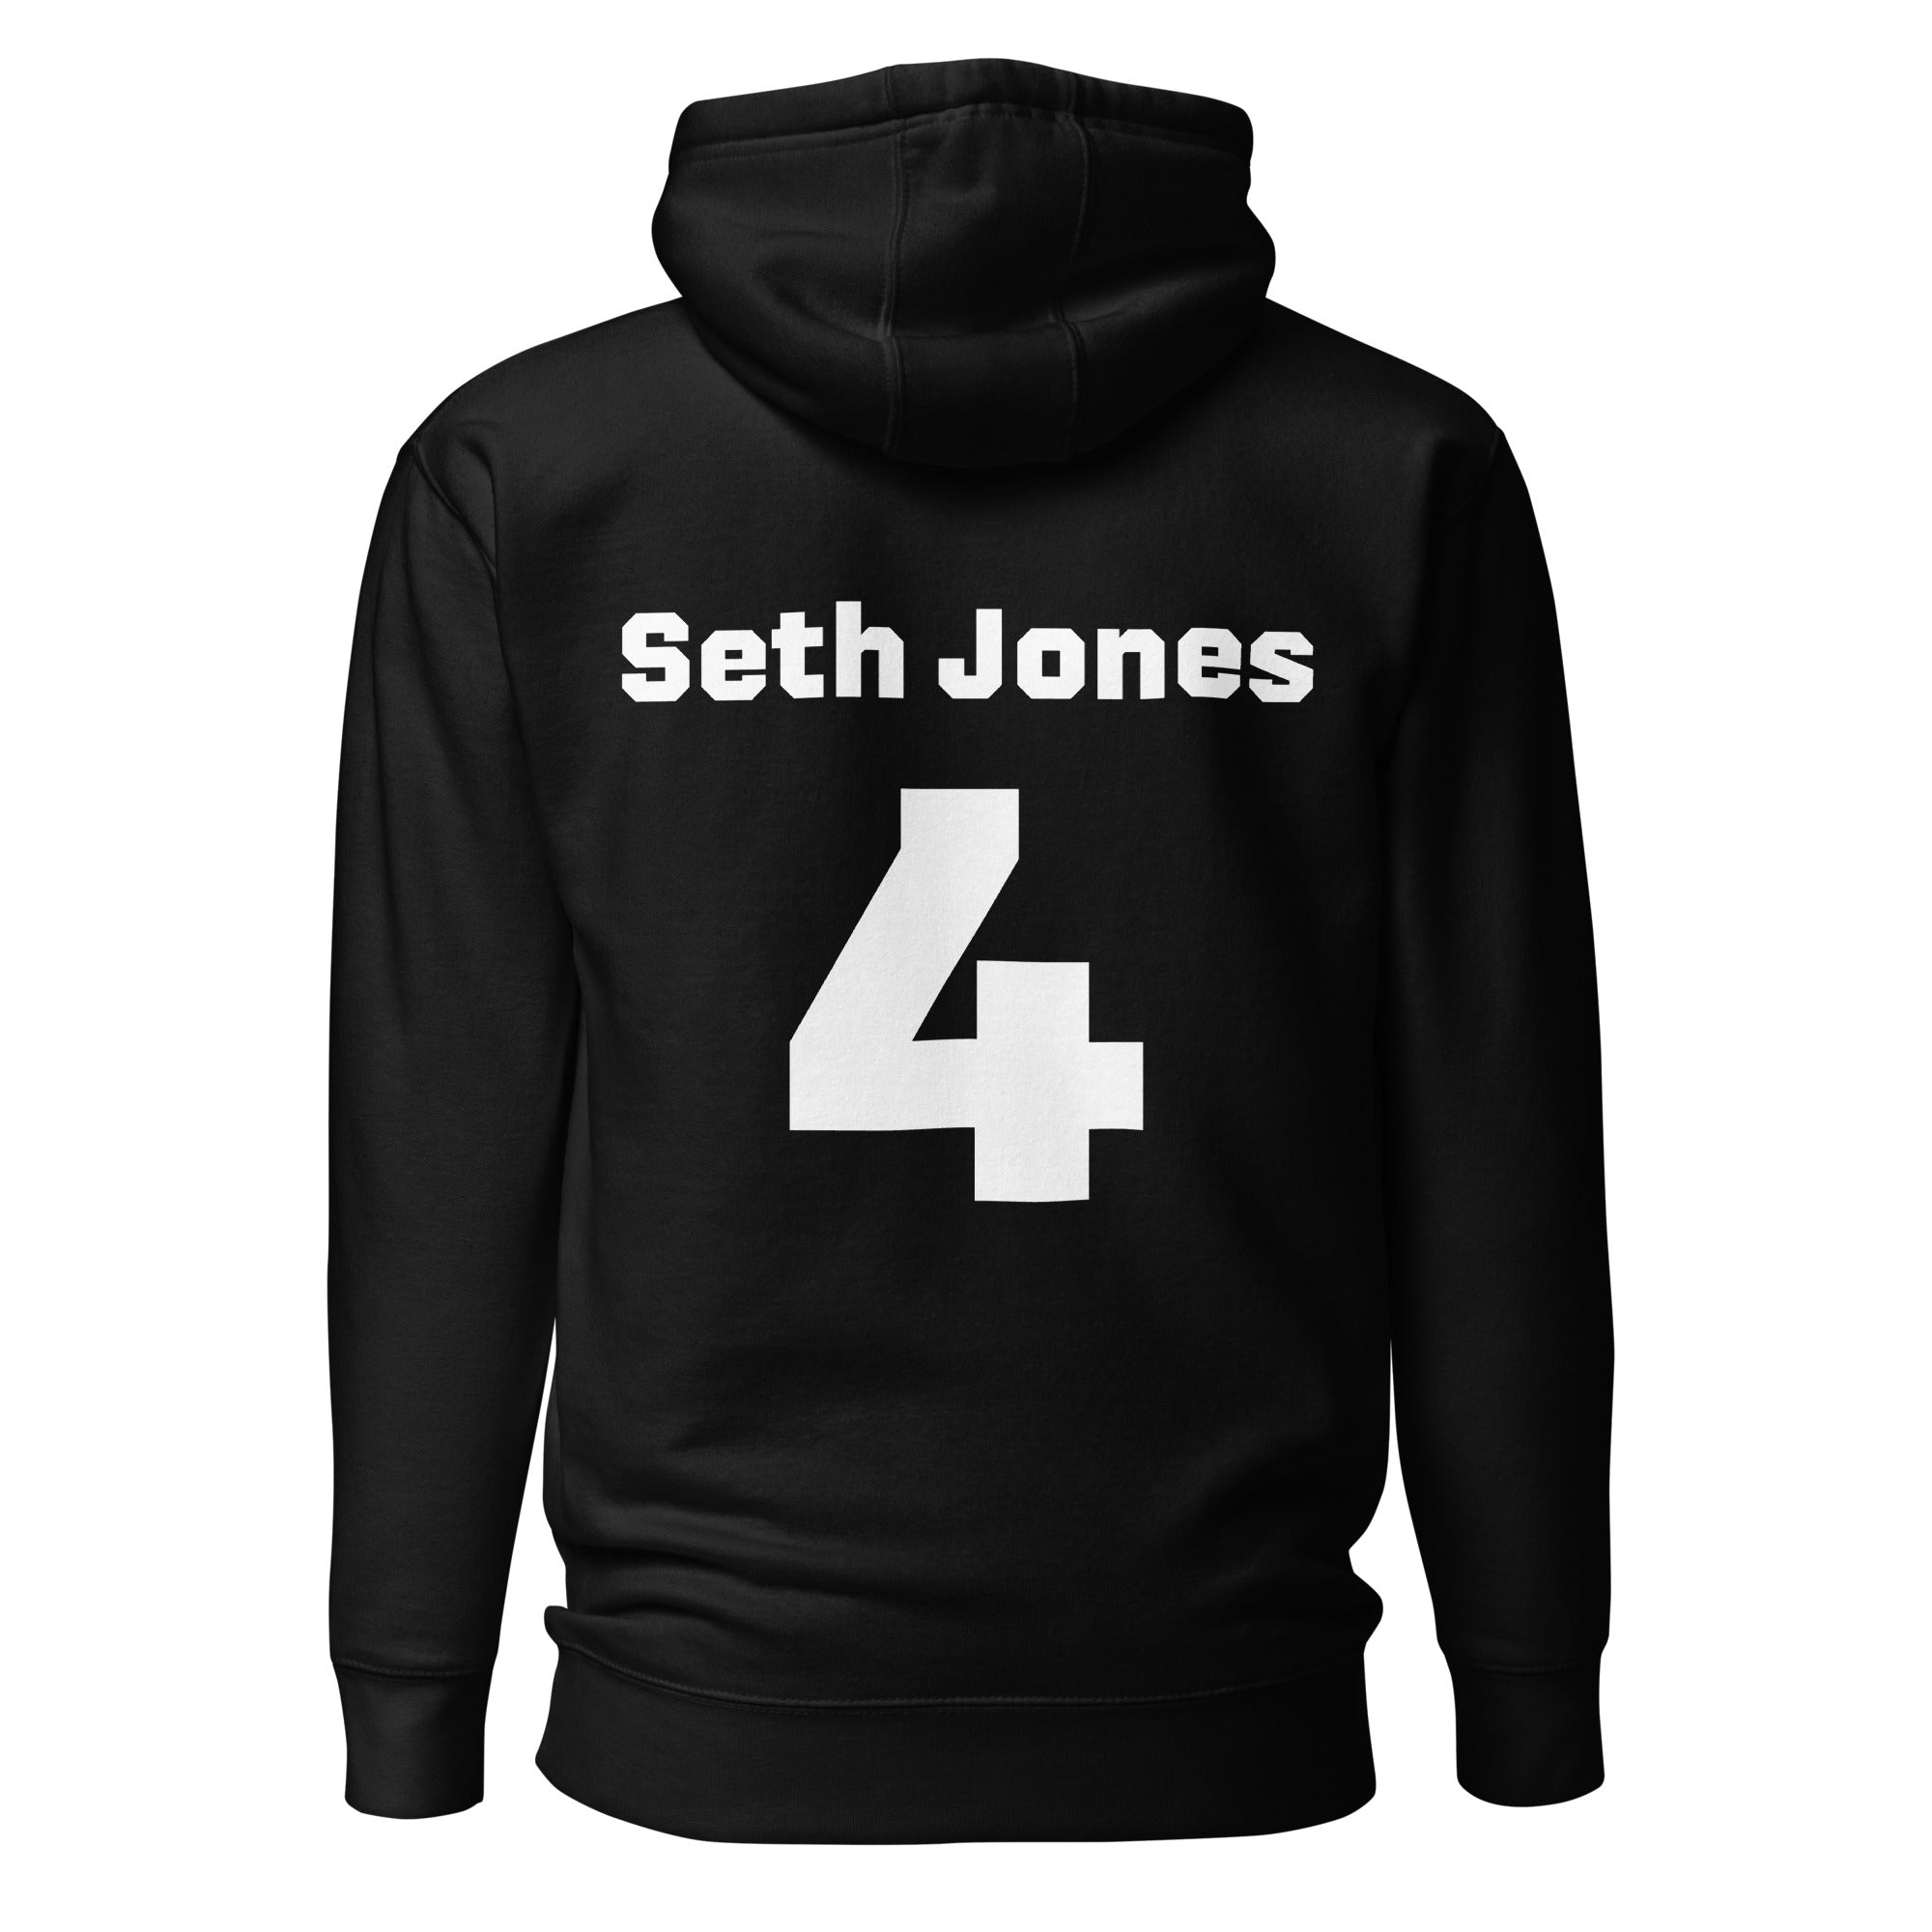 Seth Jones - Unisex Hoodie